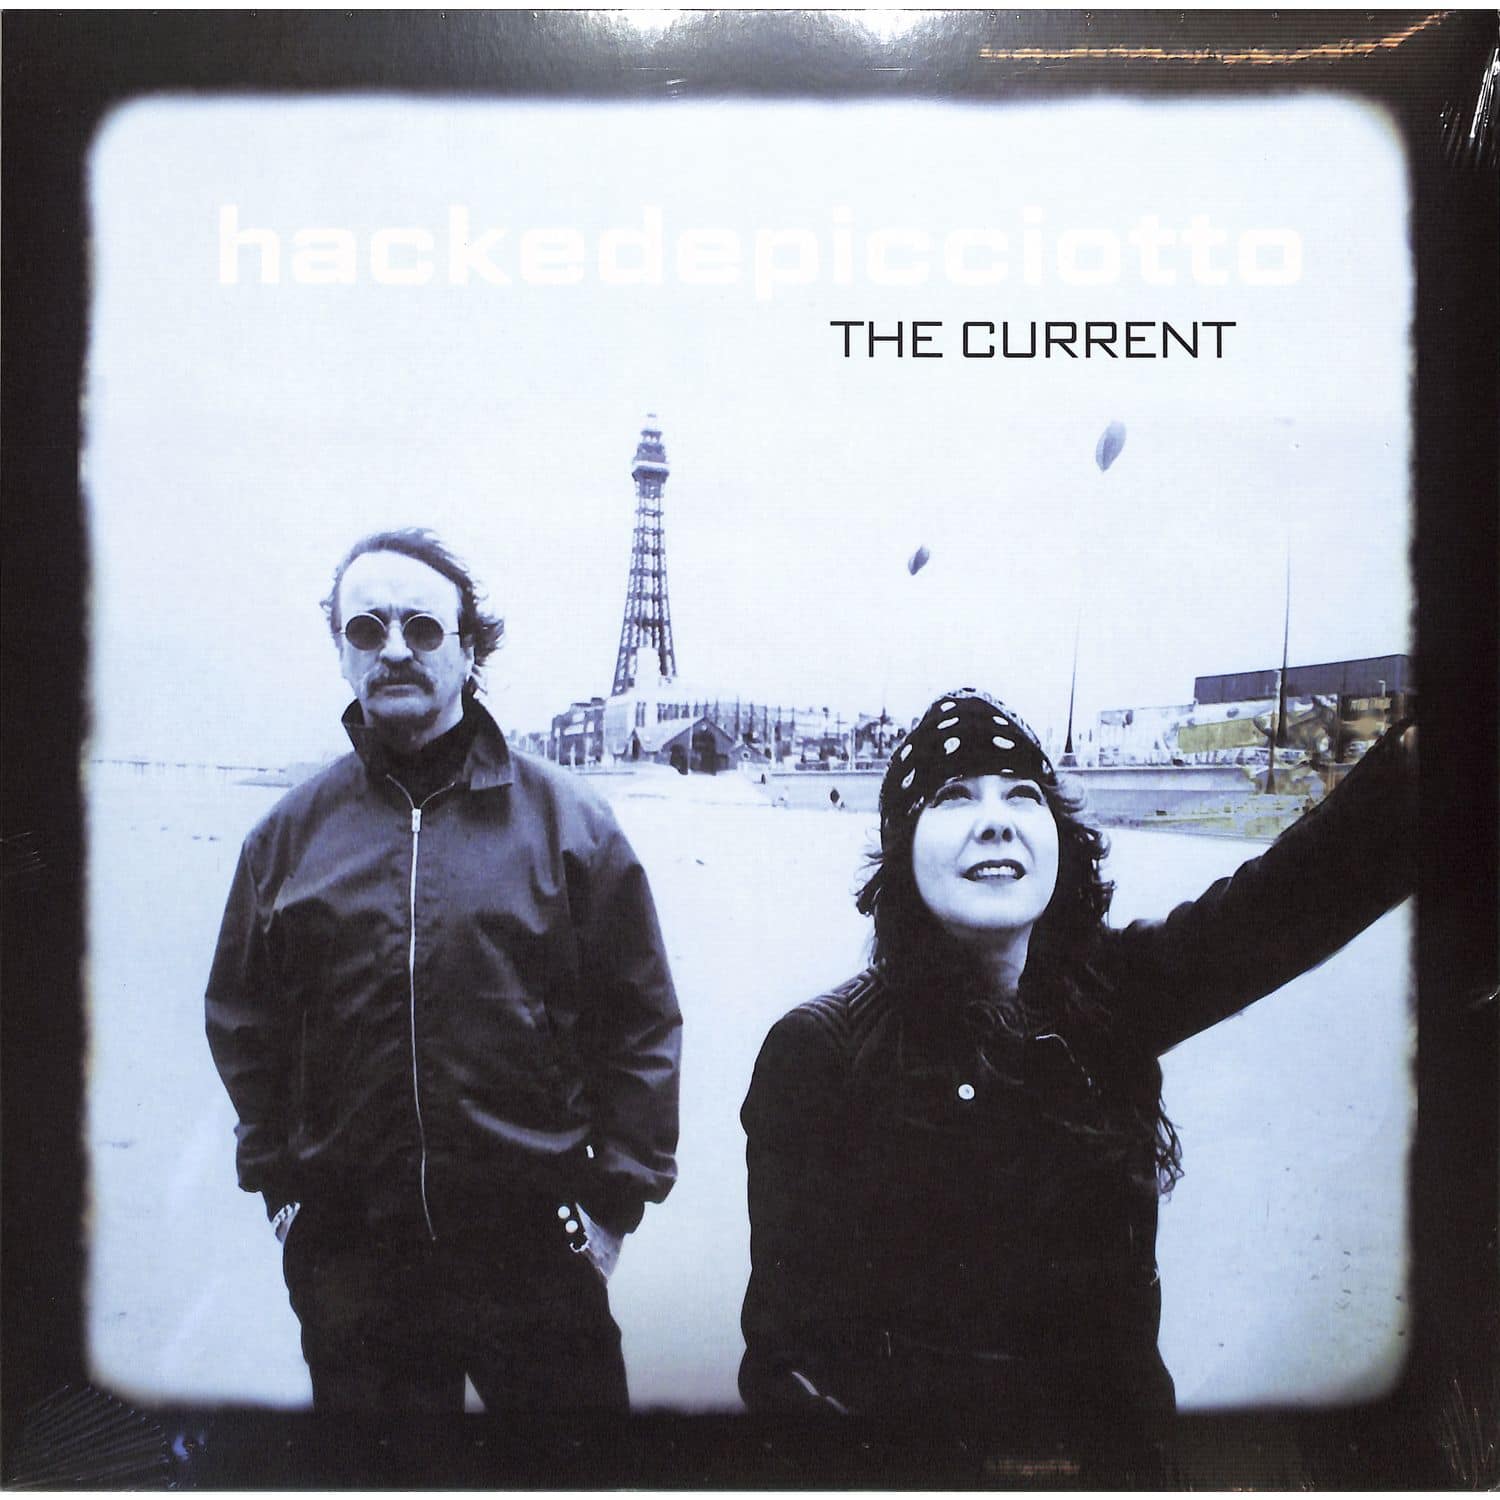 Hackedepicciotto - THE CURRENT 